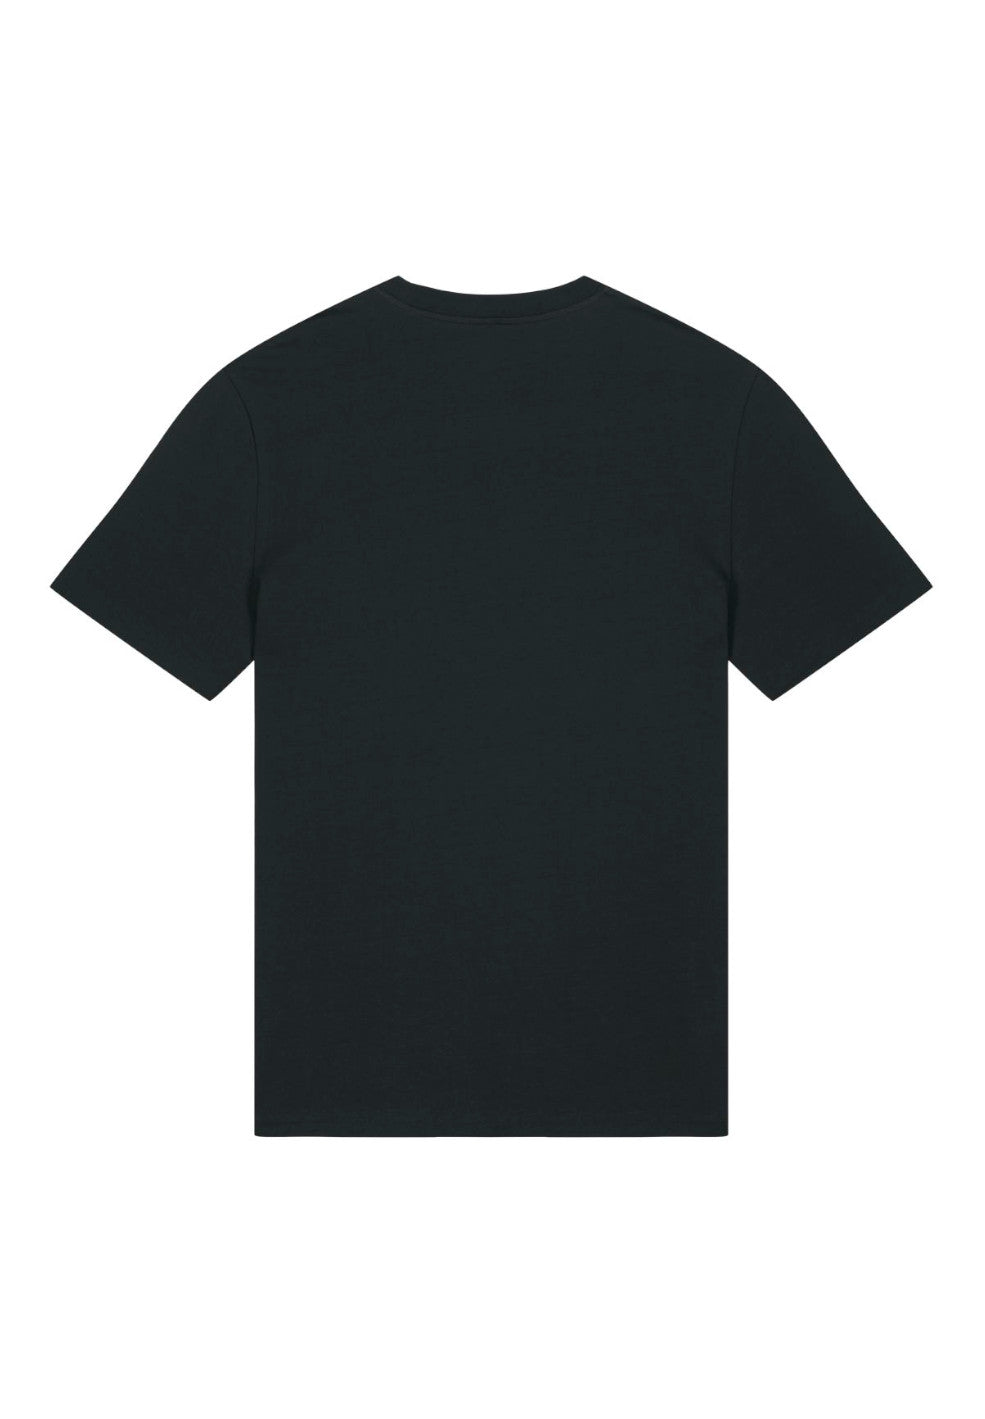 t-shirt creator black